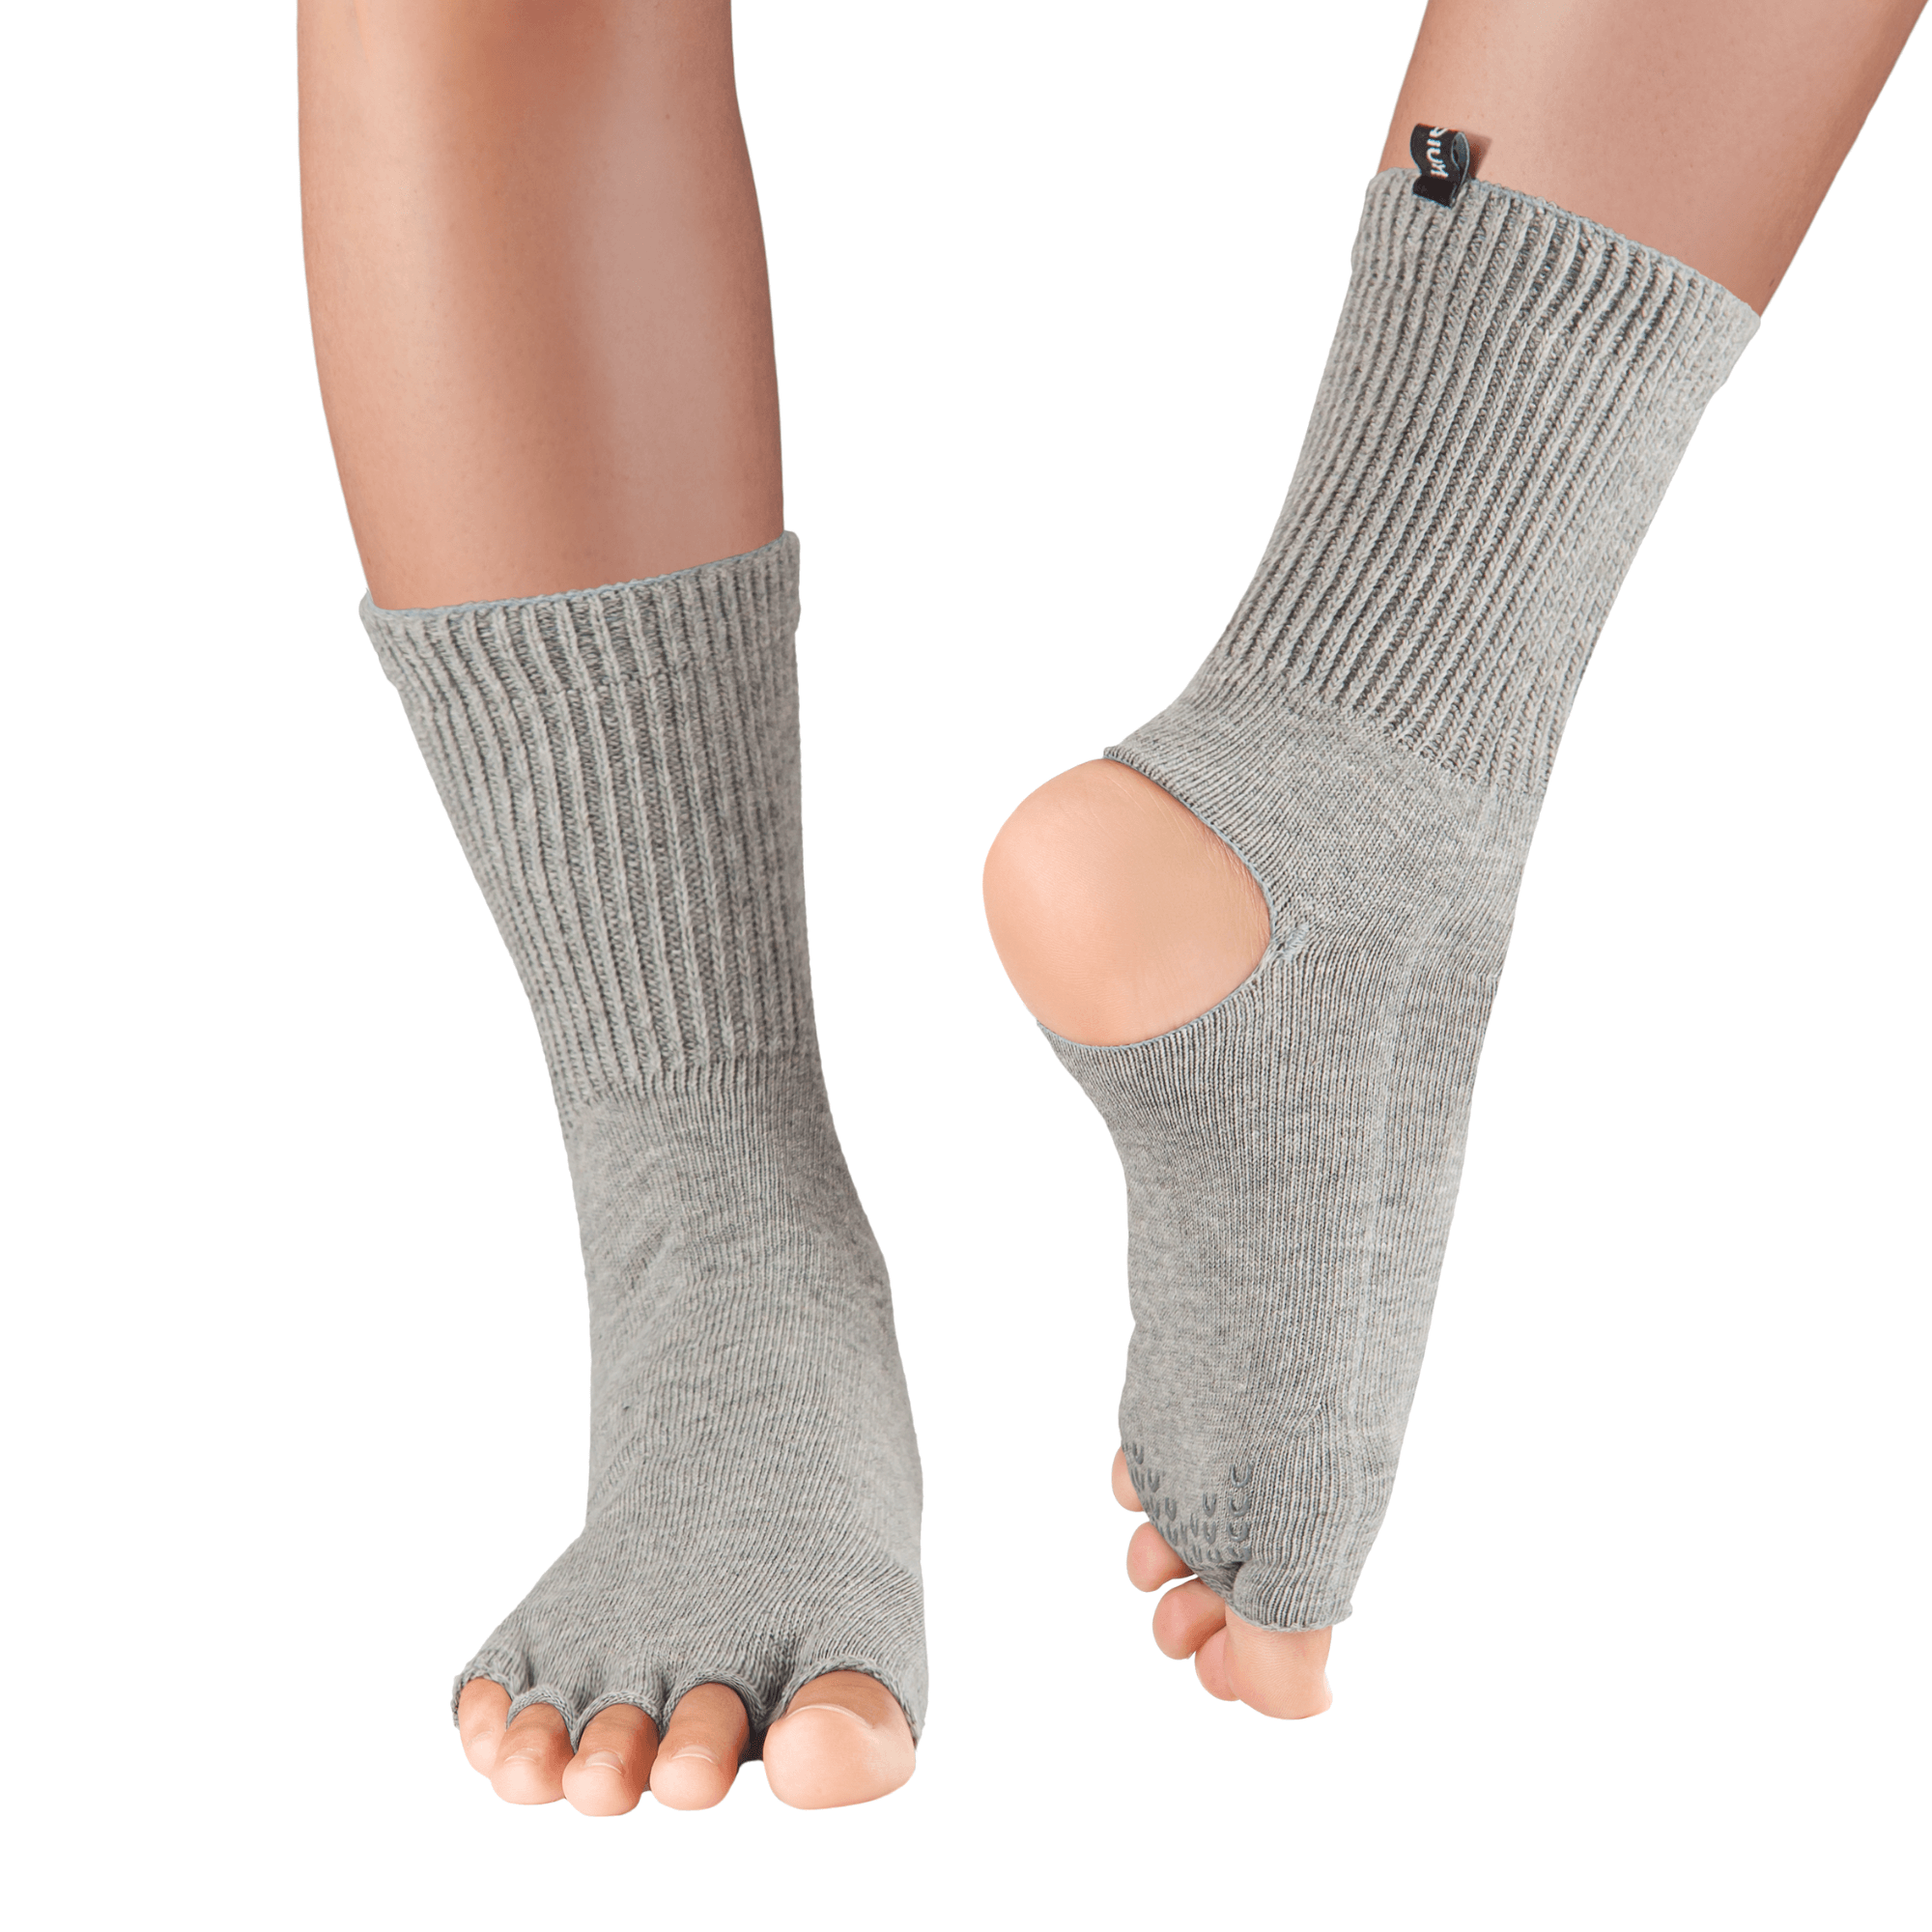 Knitido Yoga cuffs toe socks from organiccotton in gray